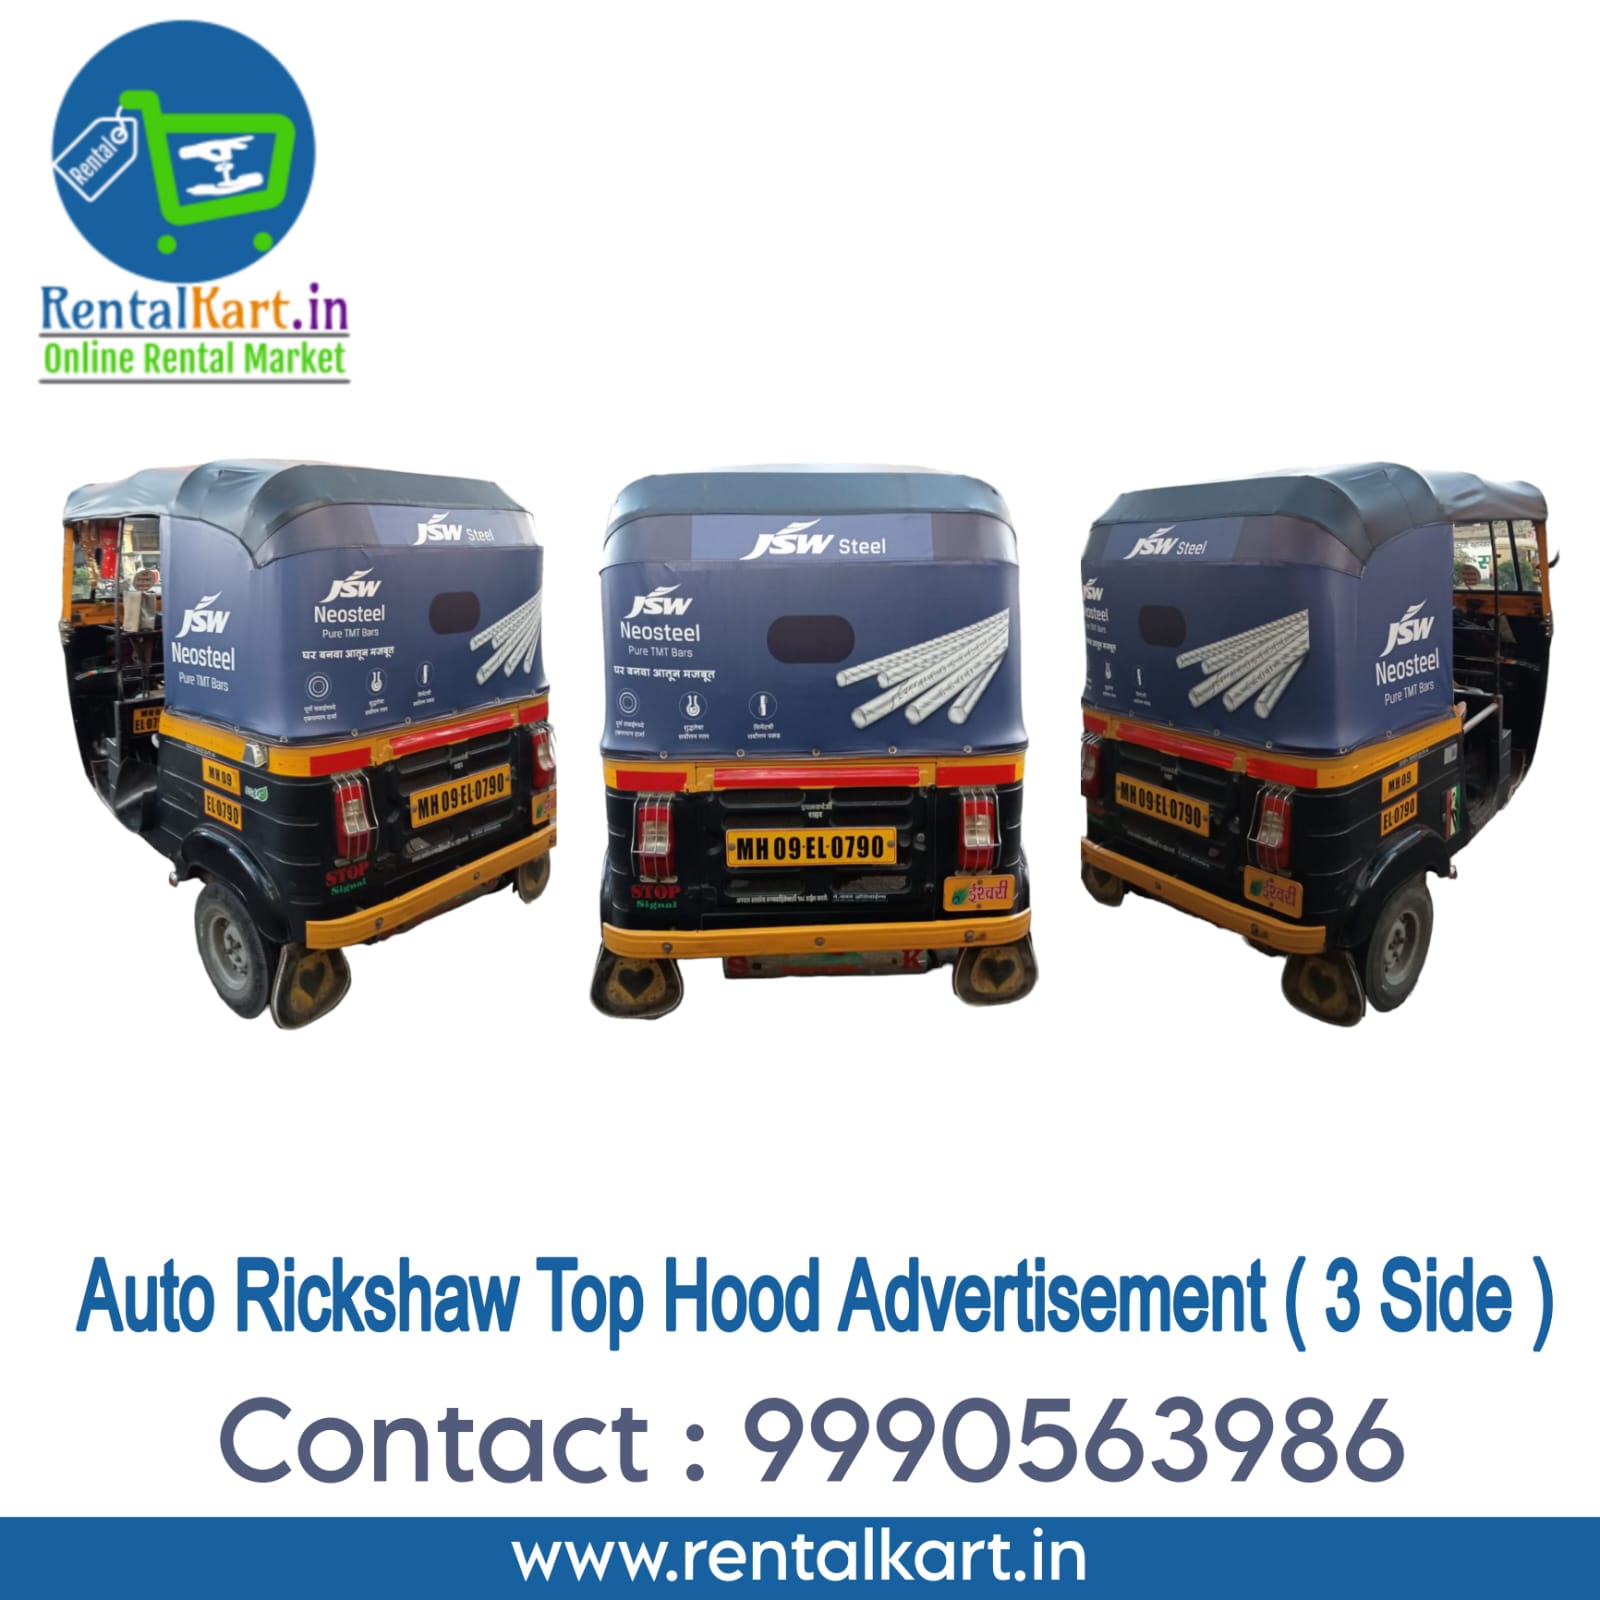 Auto Rickshaw Branding in PAN India